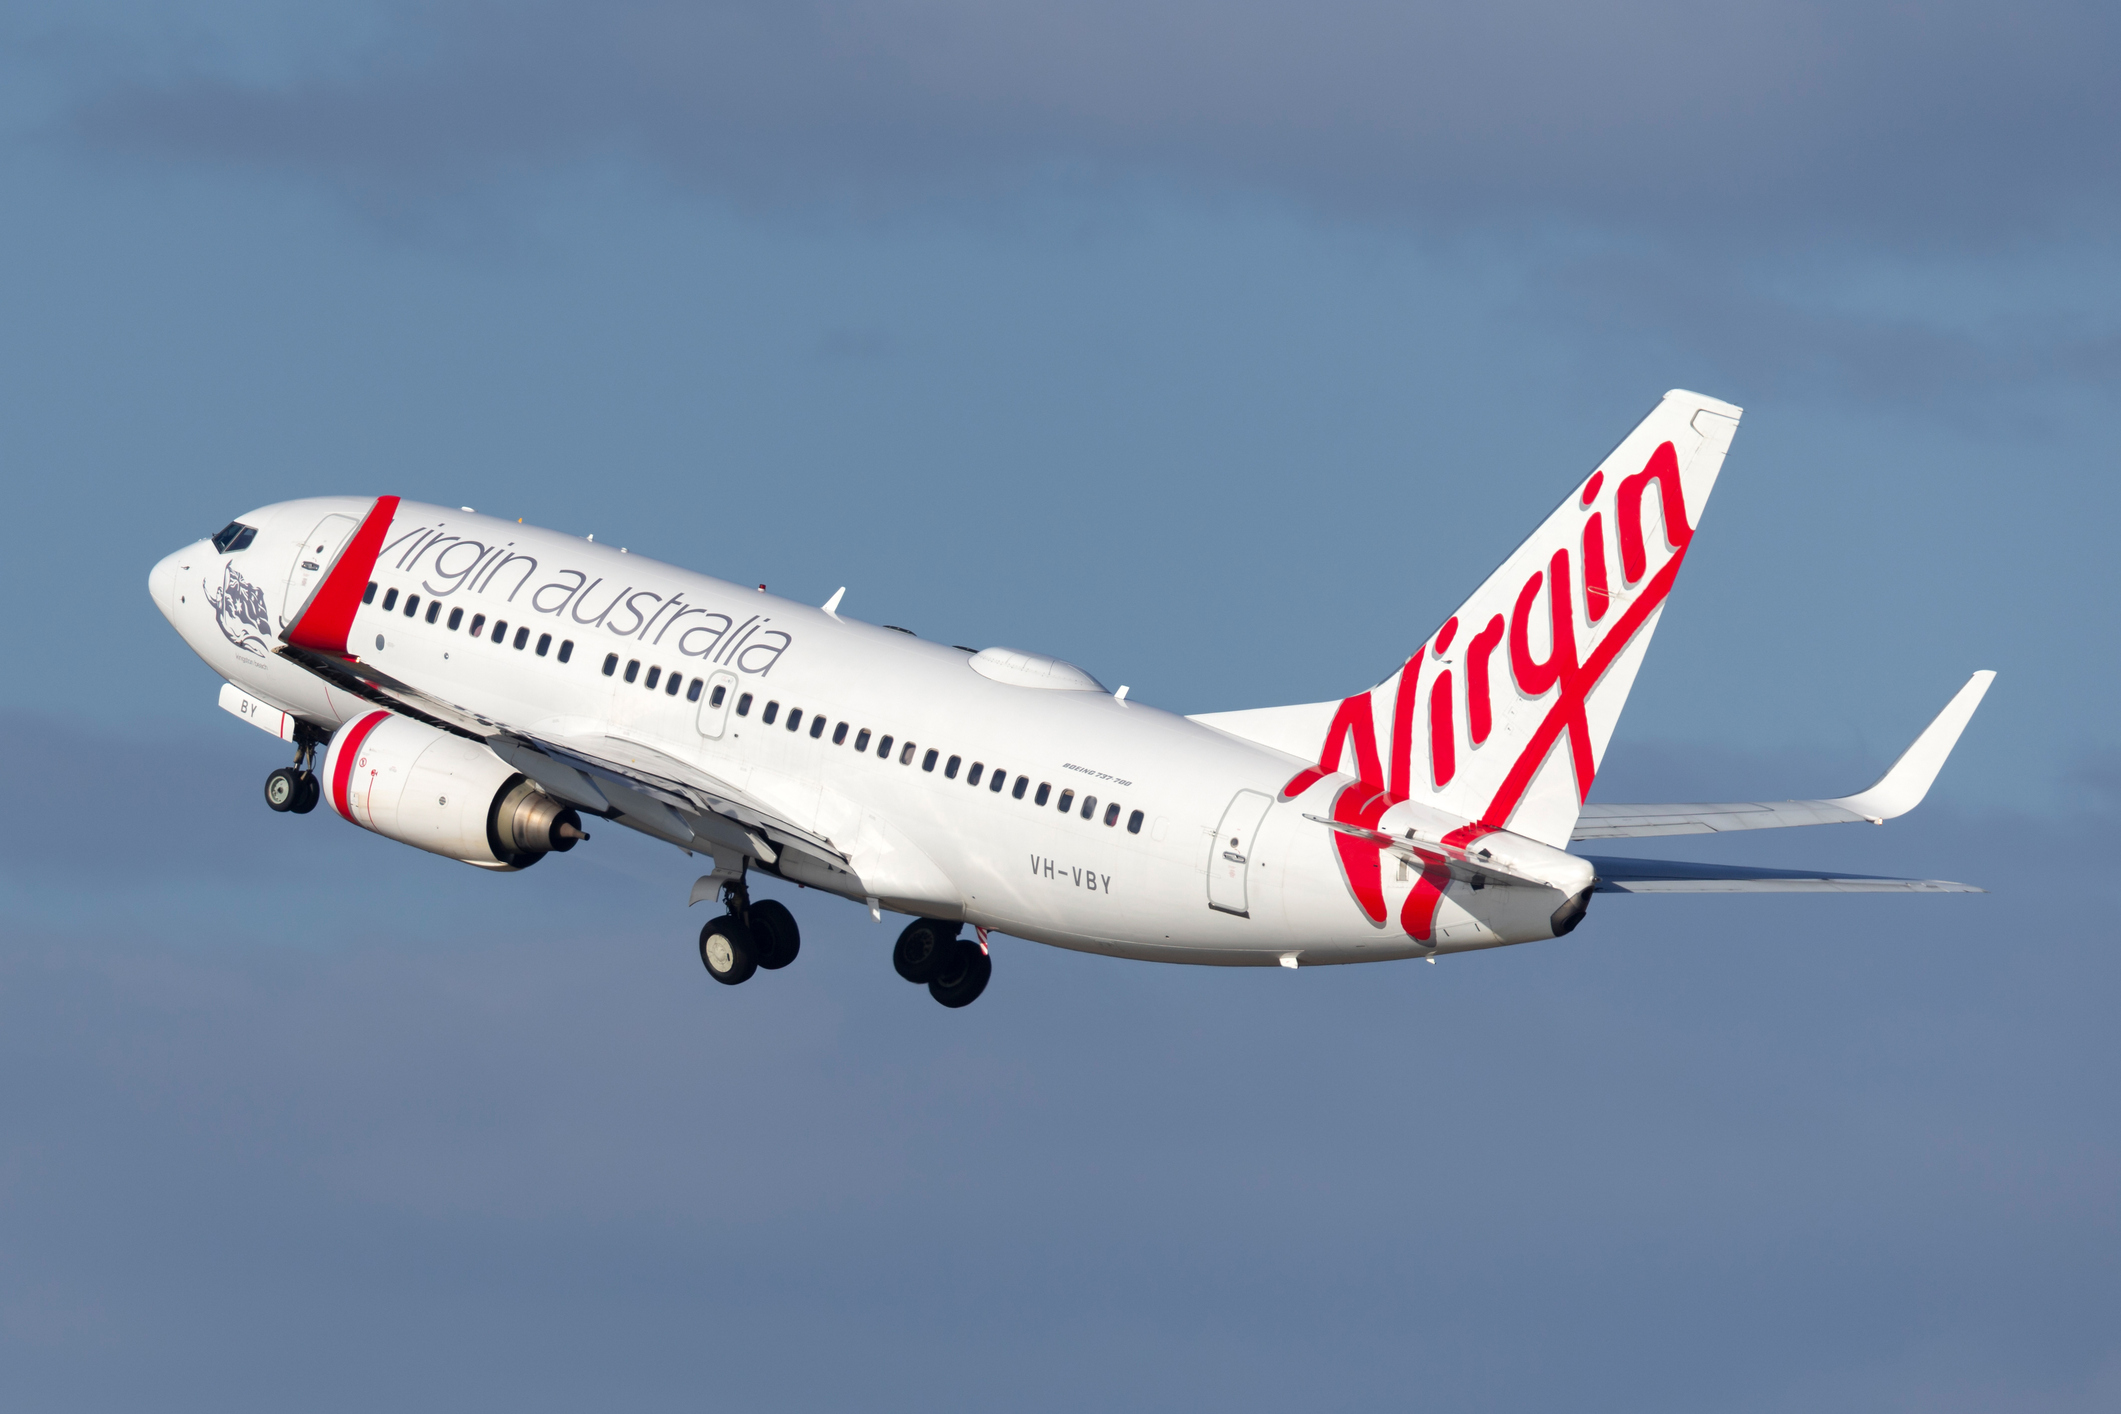 Virgin Australia Airlines Boeing 737 airliner landing at Sydney Airport.